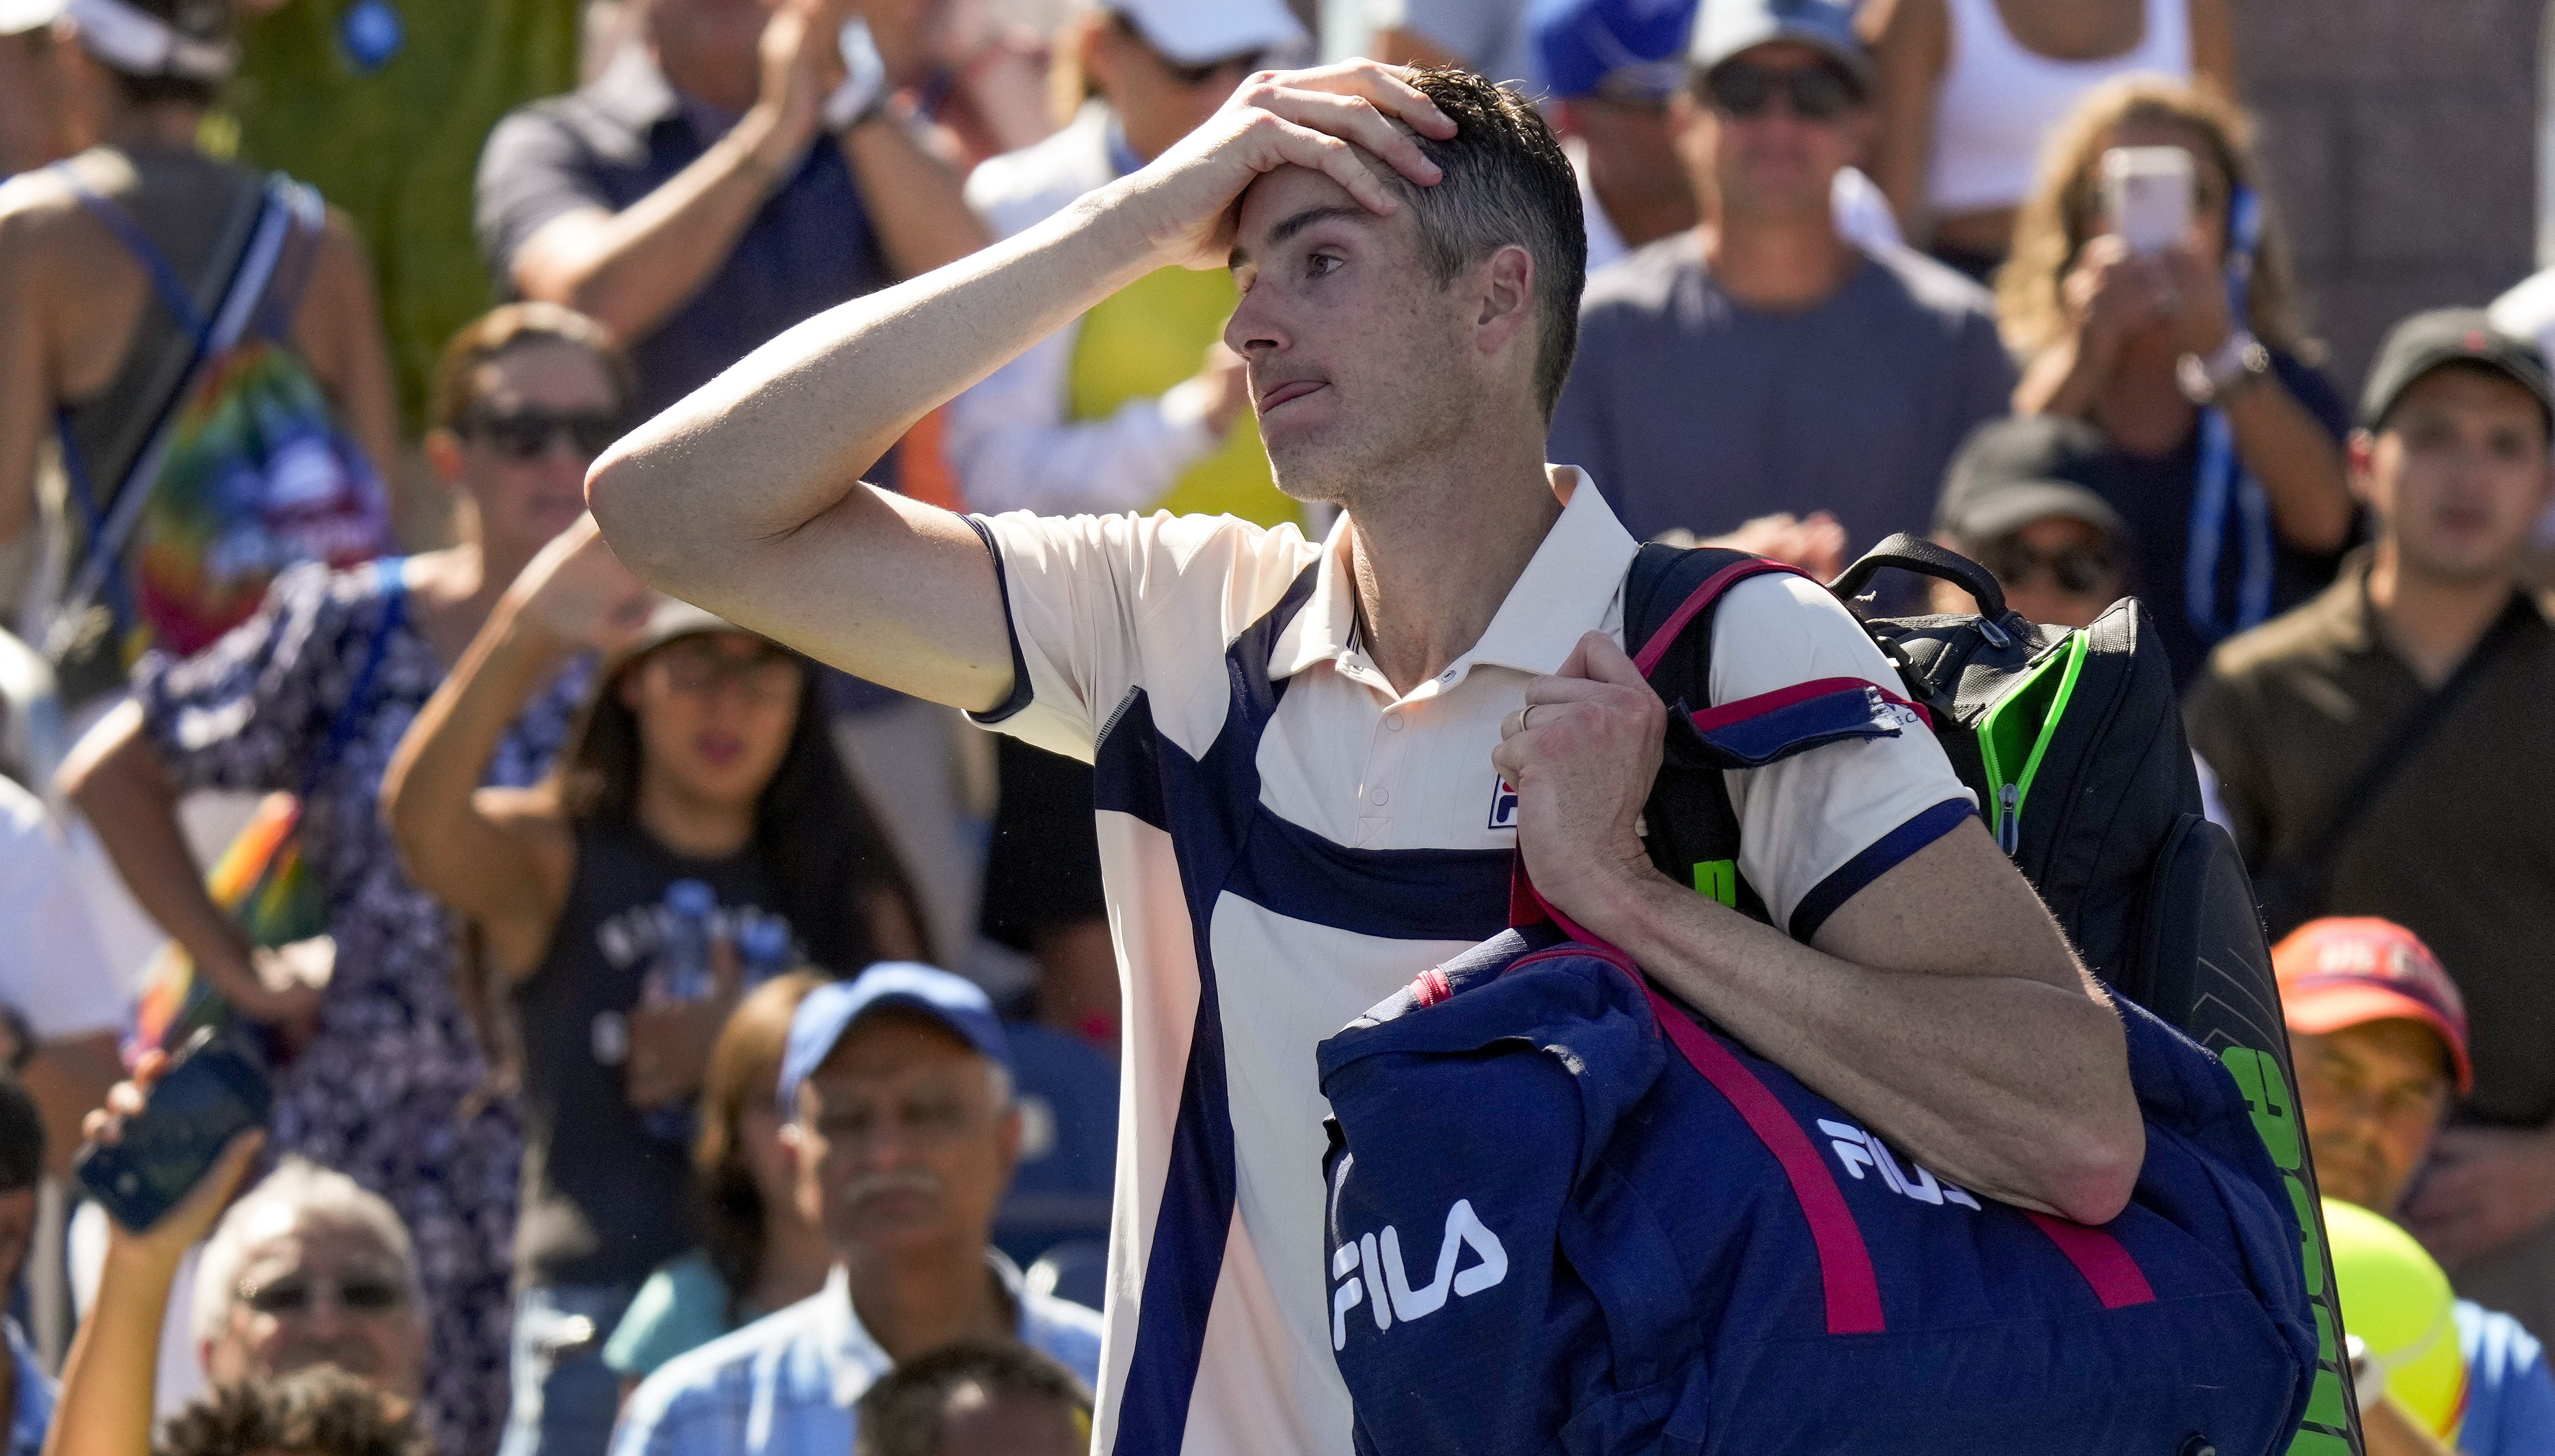 American John Isner tennis career ends at US Open